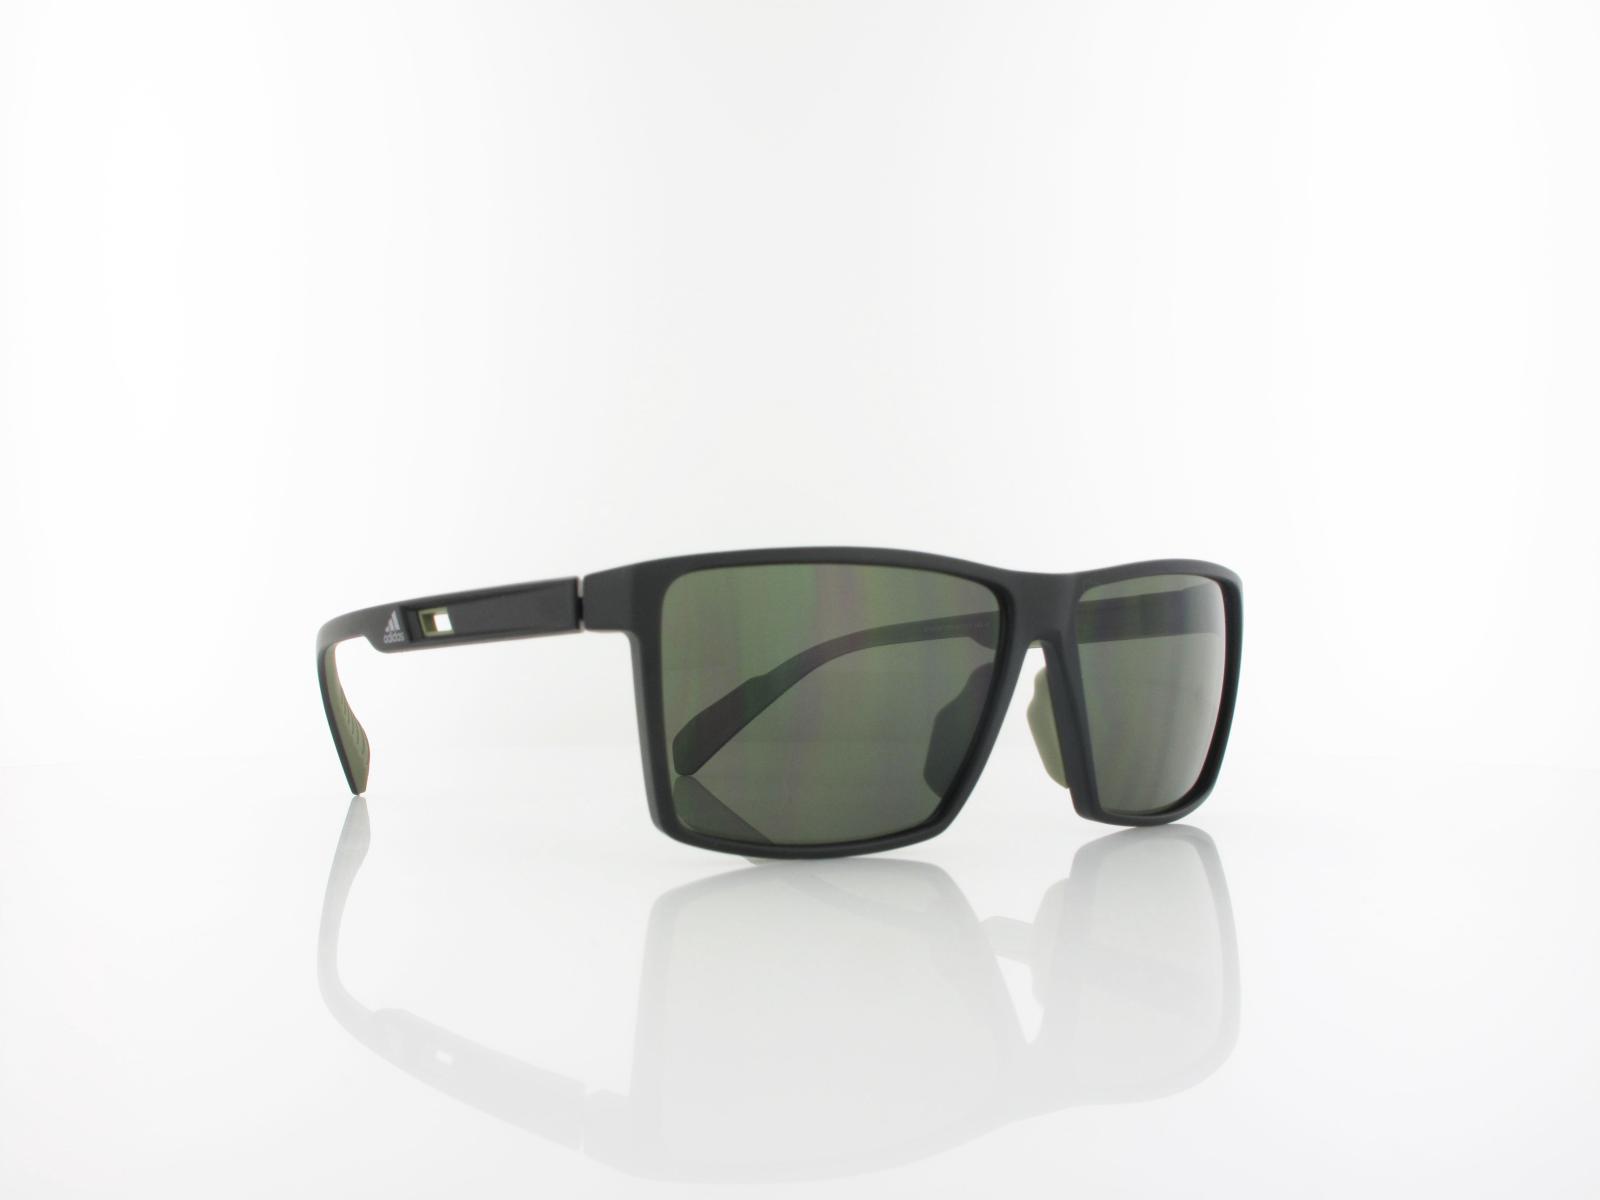 Adidas | SP0034 02N 60 | matte black / green